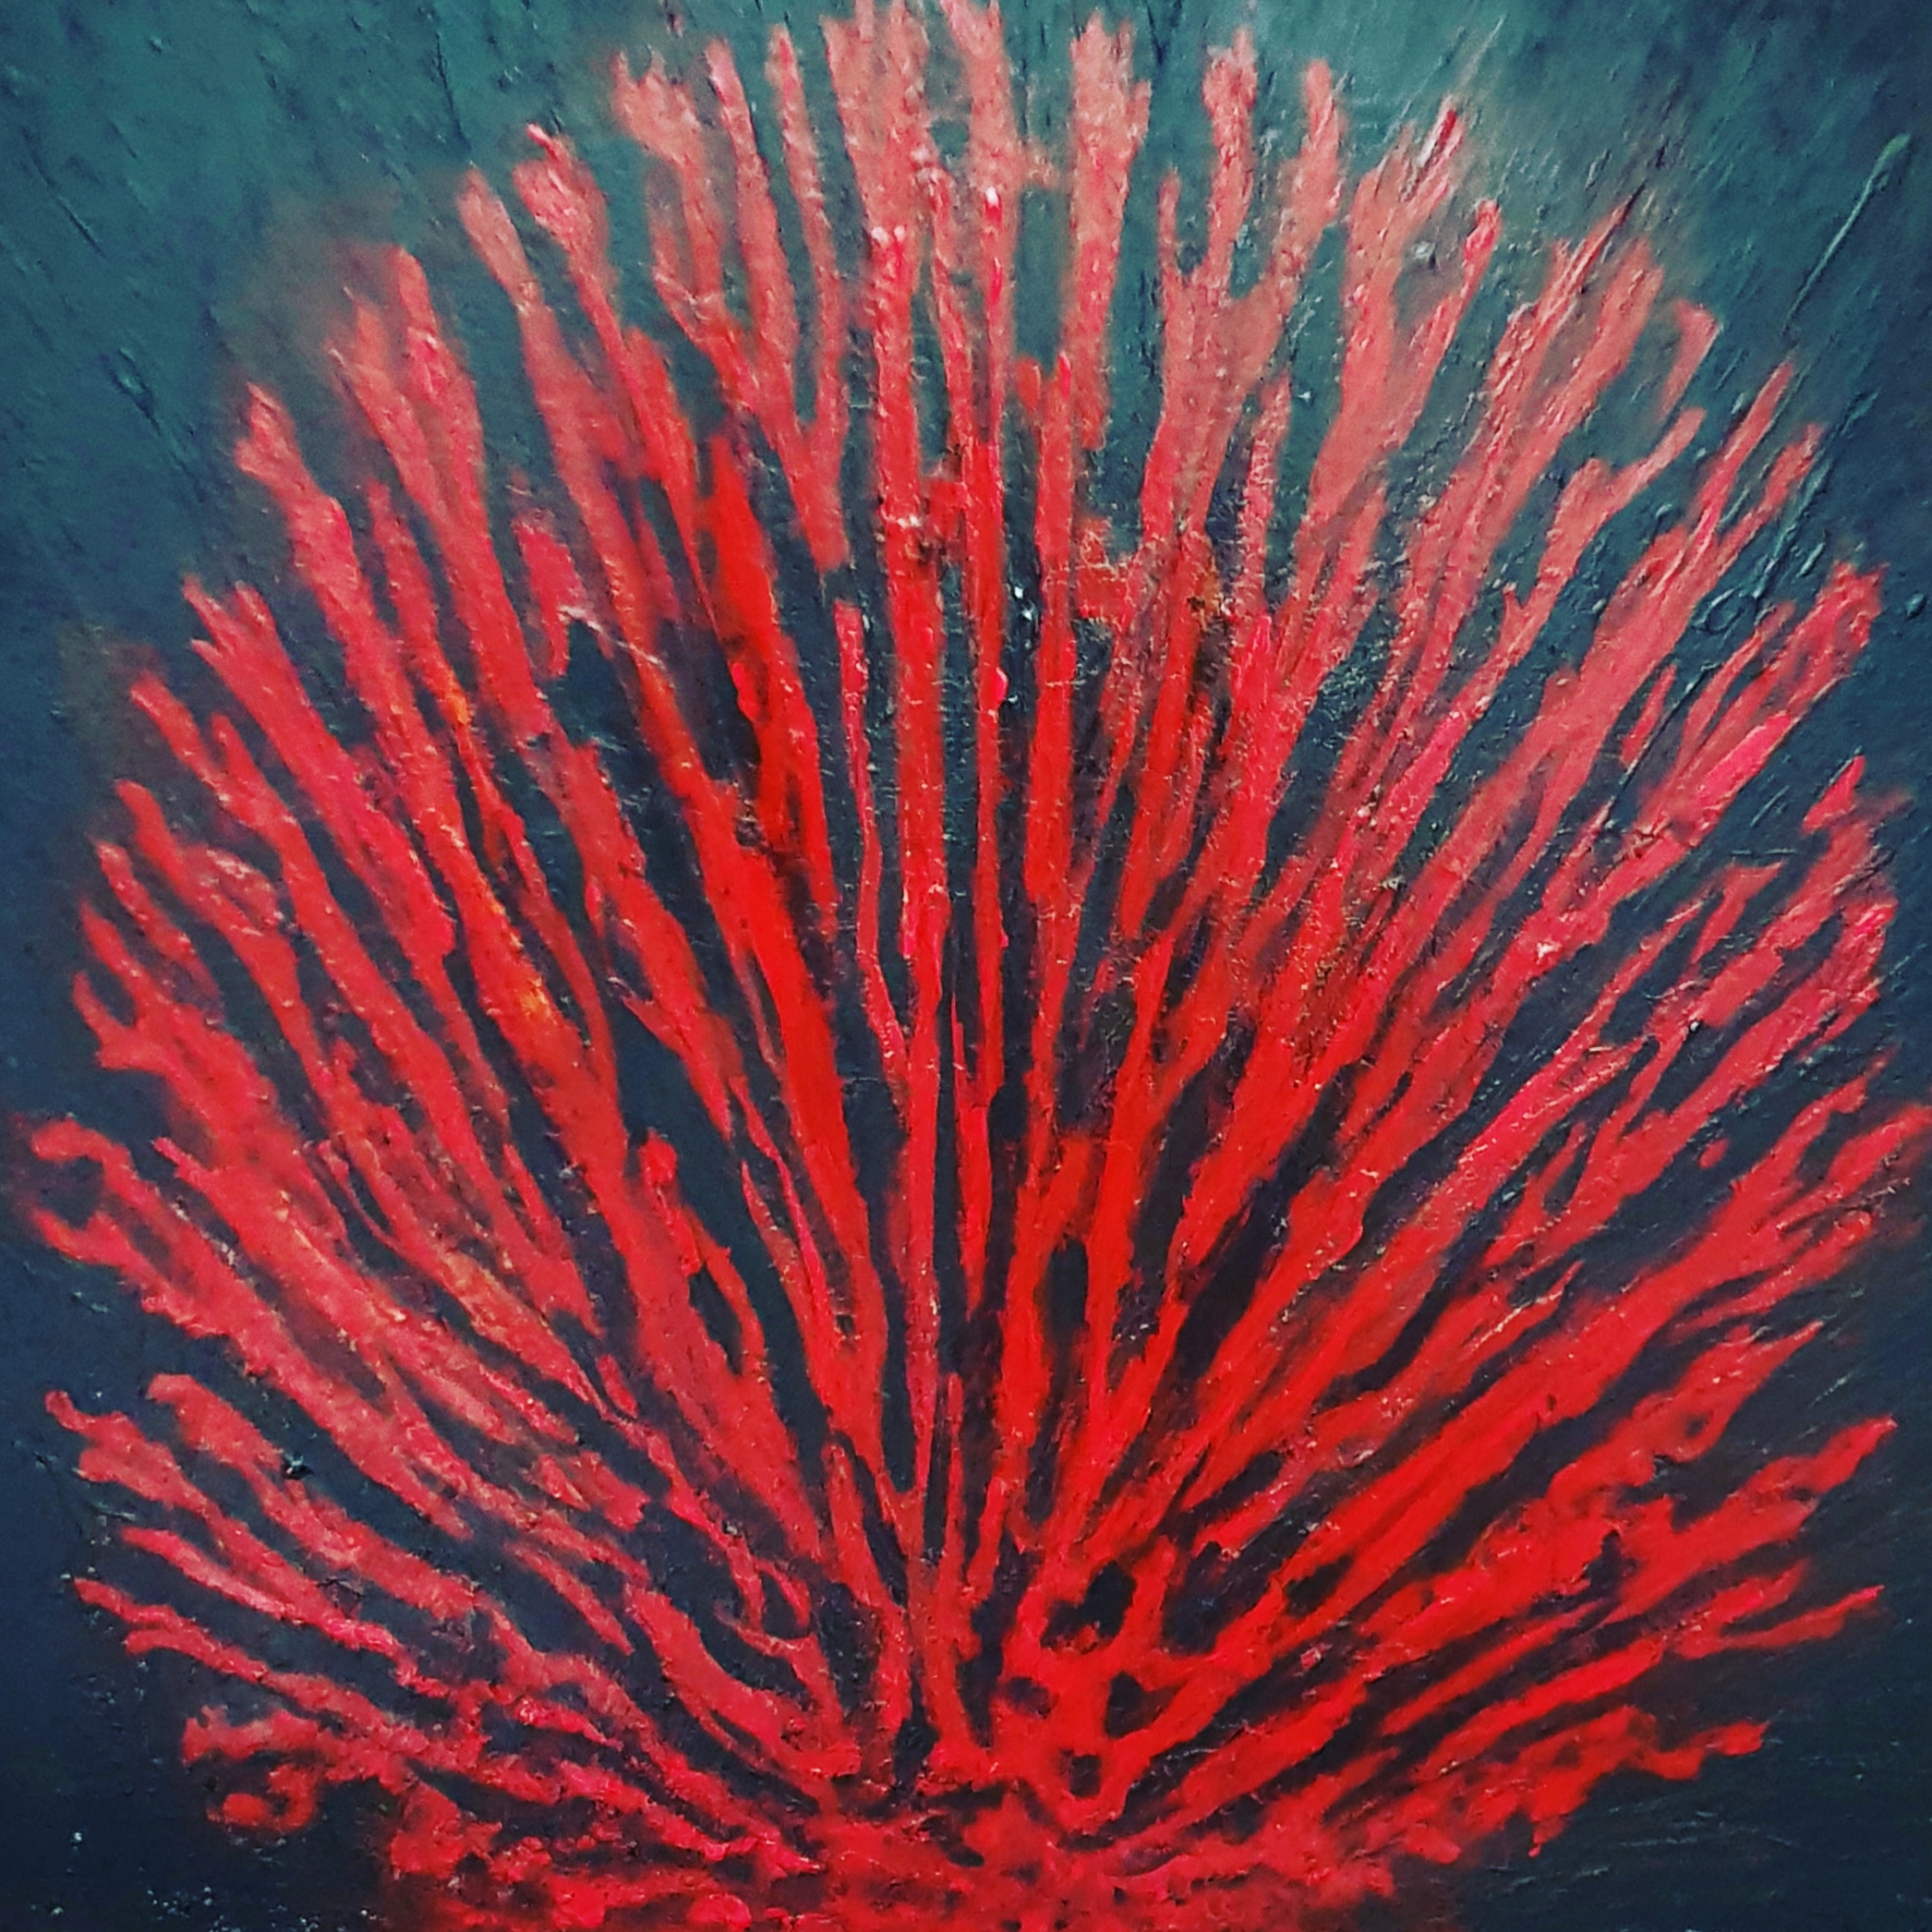 Le buisson ardent - M0ïse. Acrylic on canvas, 60 cm x 60 cm. 09.10.2019 VENDU